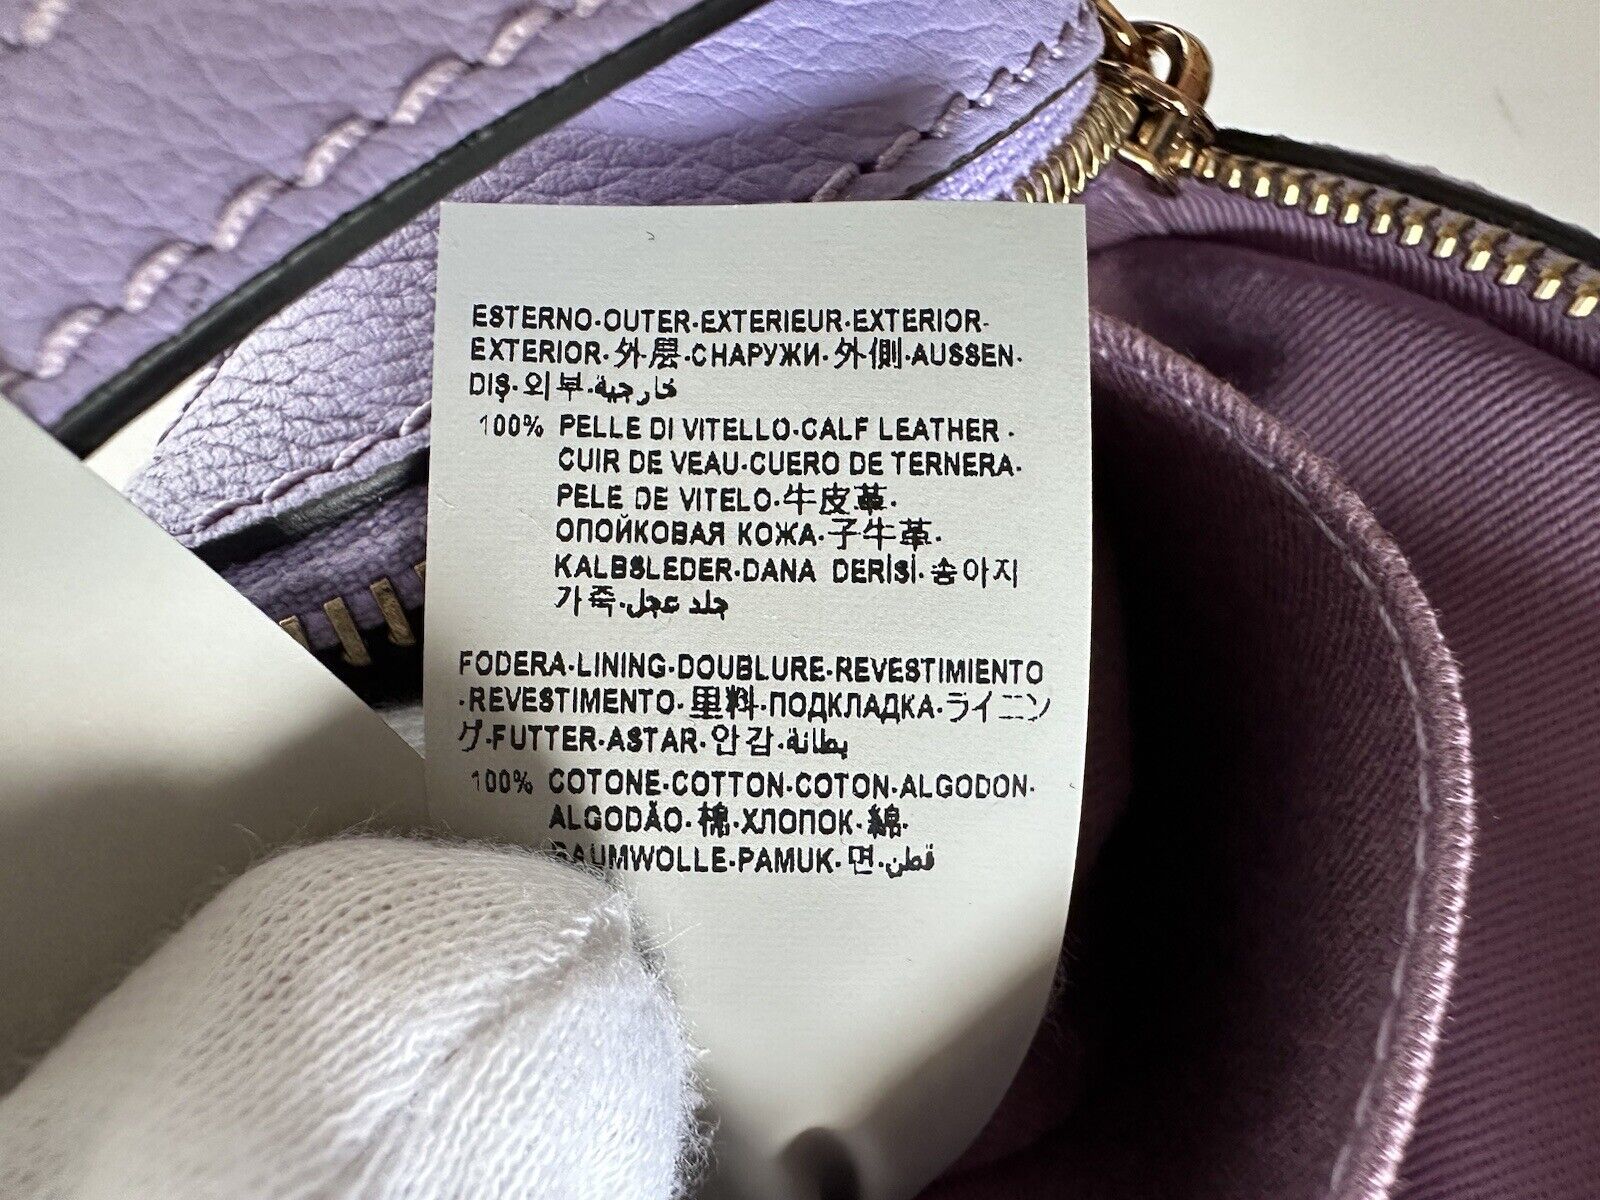 NWT $1295 Versace Круглая сиреневая сумка через плечо из кожи теленка Medusa DBFI050 IT 